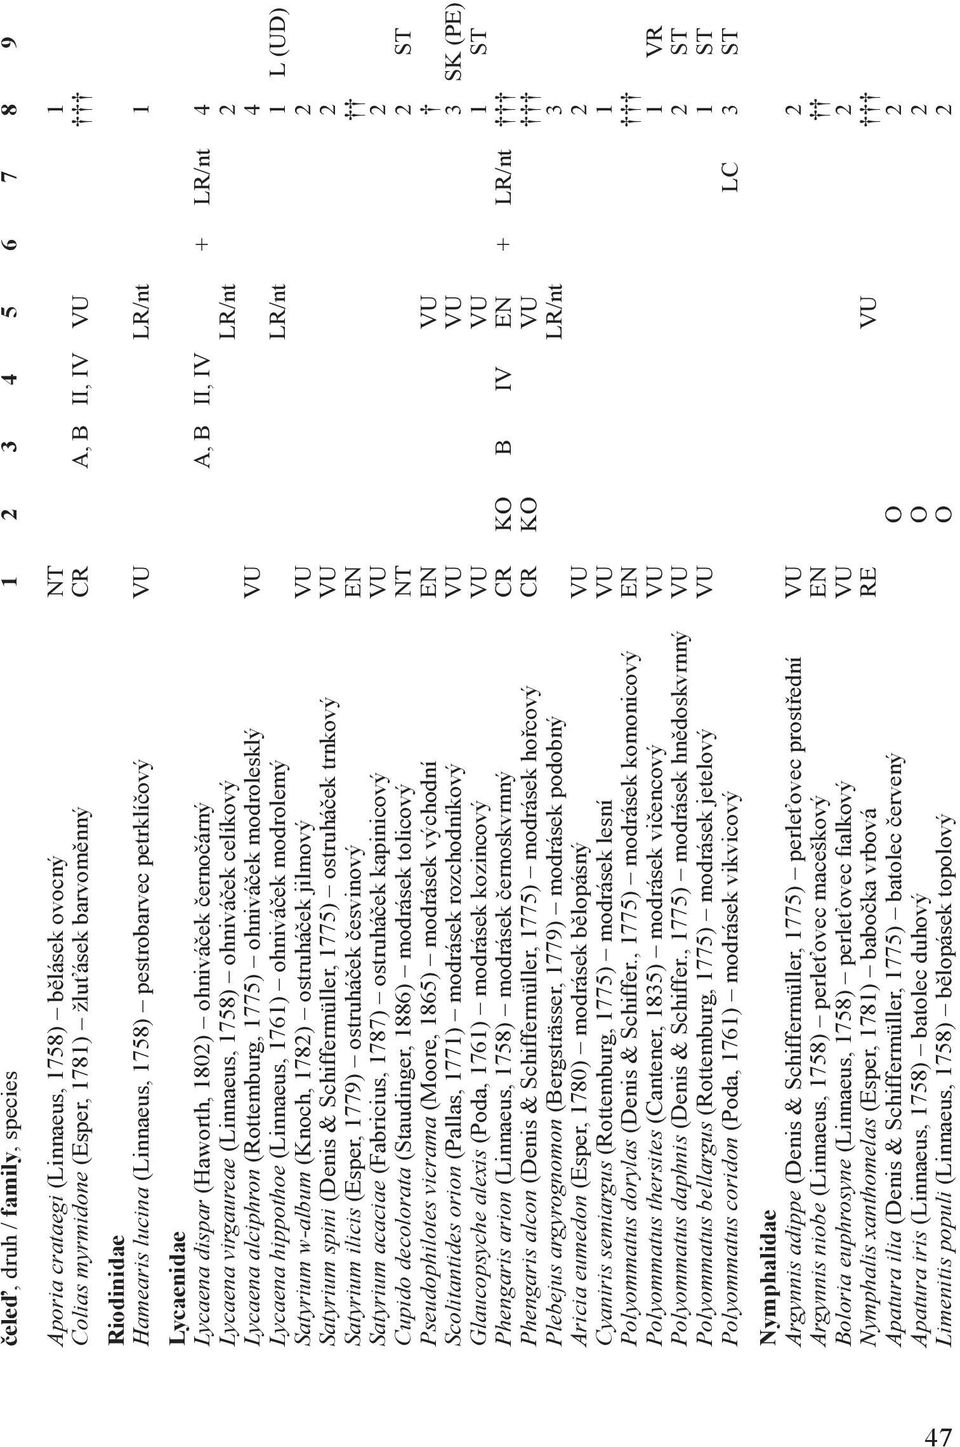 2 Lycaena alciphron (Rottemburg, 1775) ohniváček modrolesklý VU 4 Lycaena hippothoe (Linnaeus, 1761) ohniváček modrolemý LR/nt 1 L (UD) Satyrium w-album (Knoch, 1782) ostruháček jilmový VU 2 Satyrium